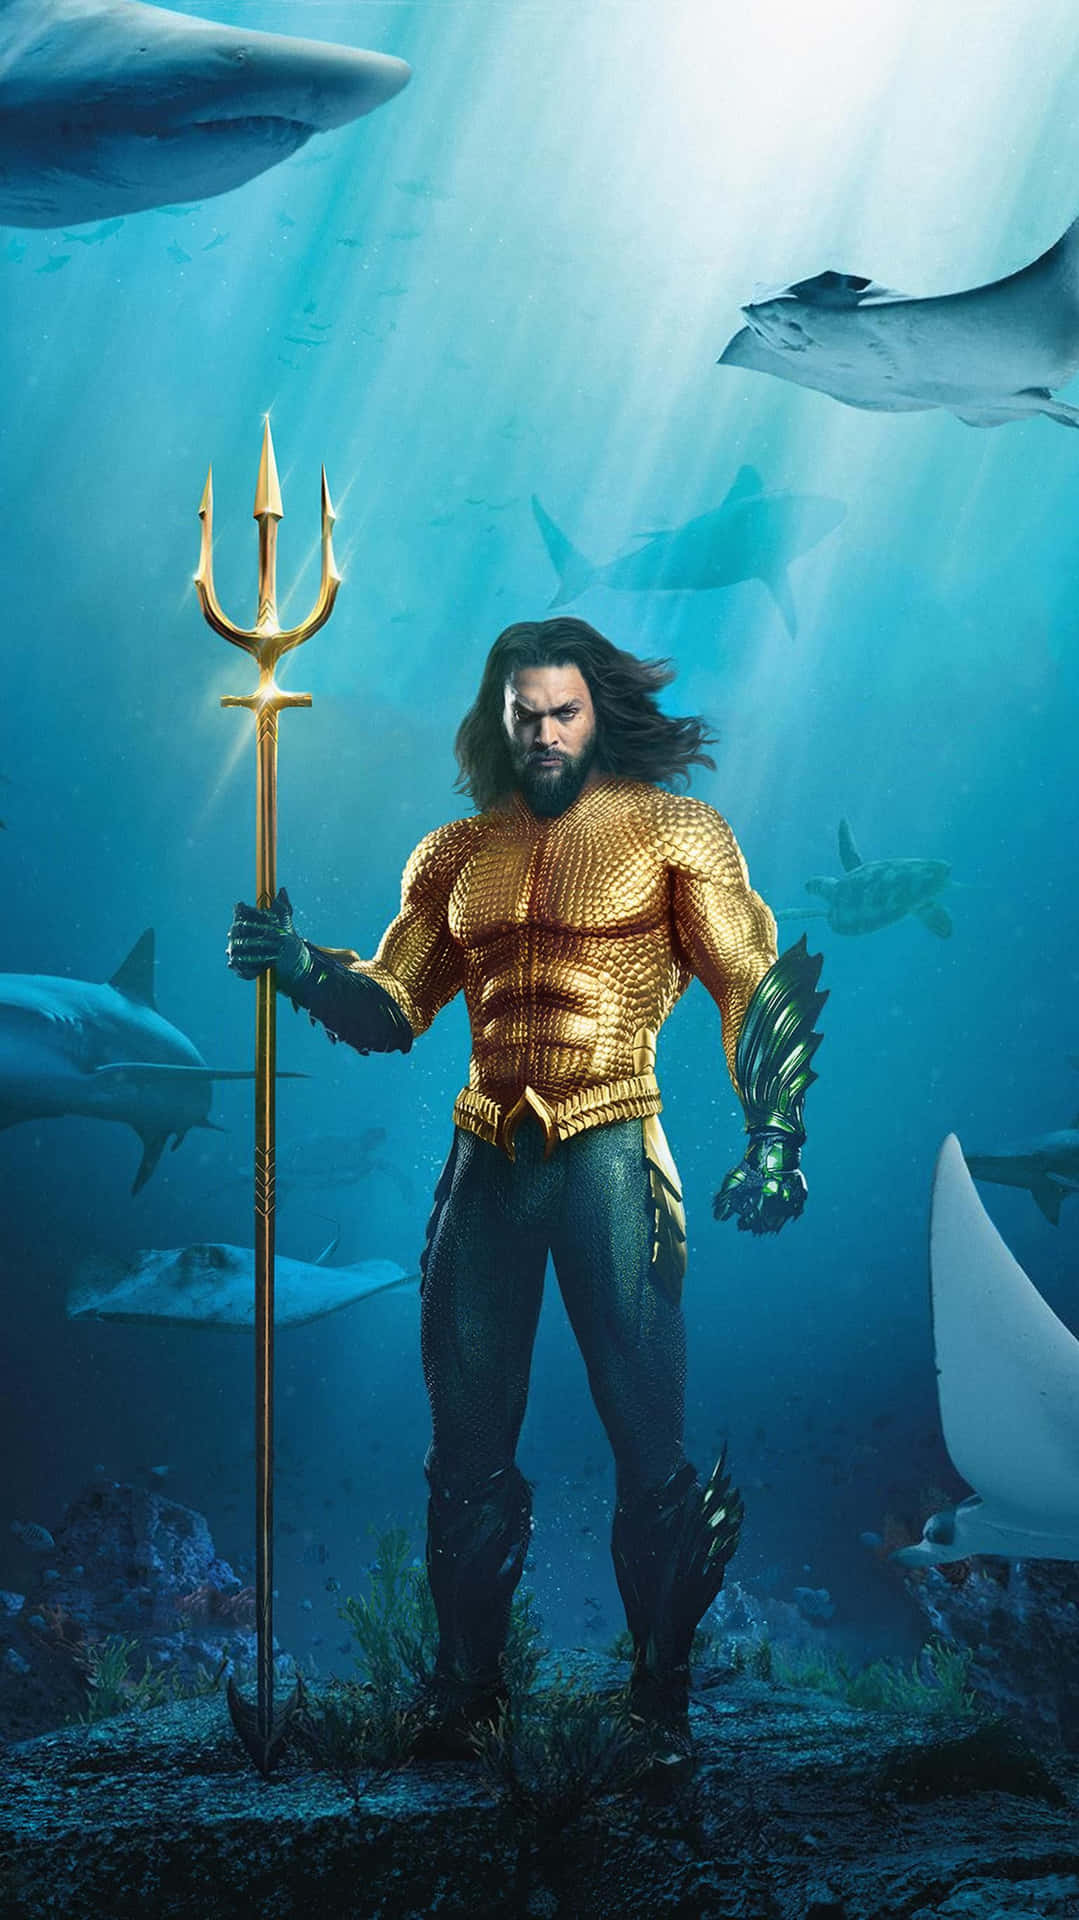 "Aquaman- The King of the Seven Seas"